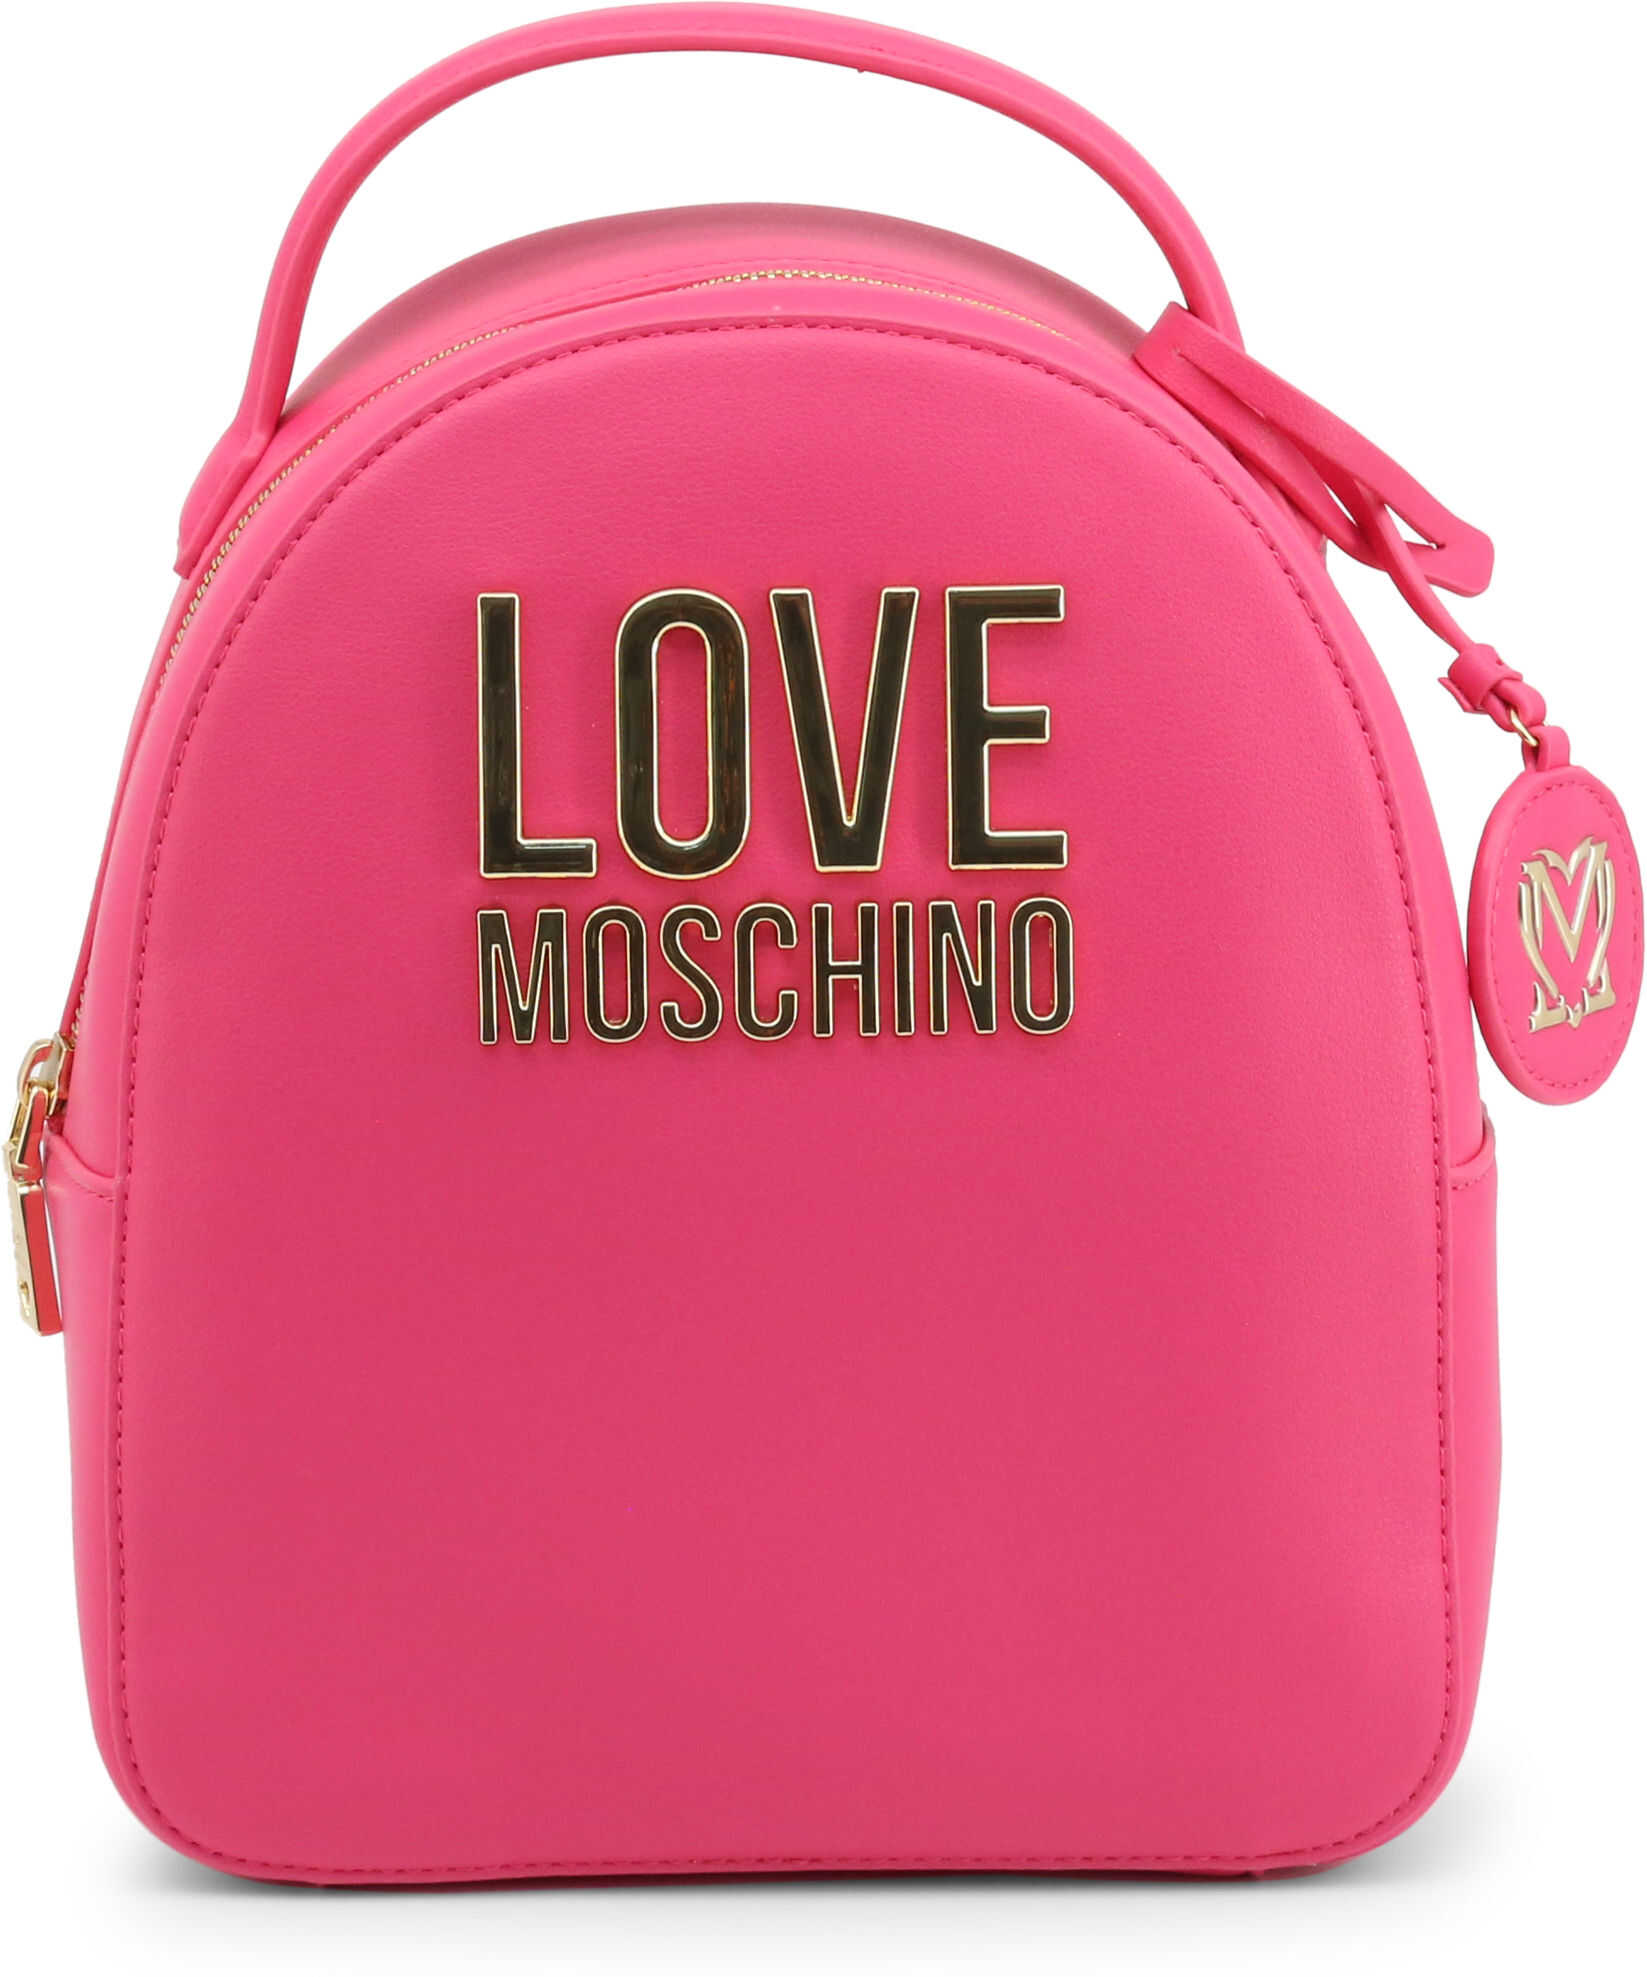 LOVE Moschino Jc4101Pp1Clj0 PINK